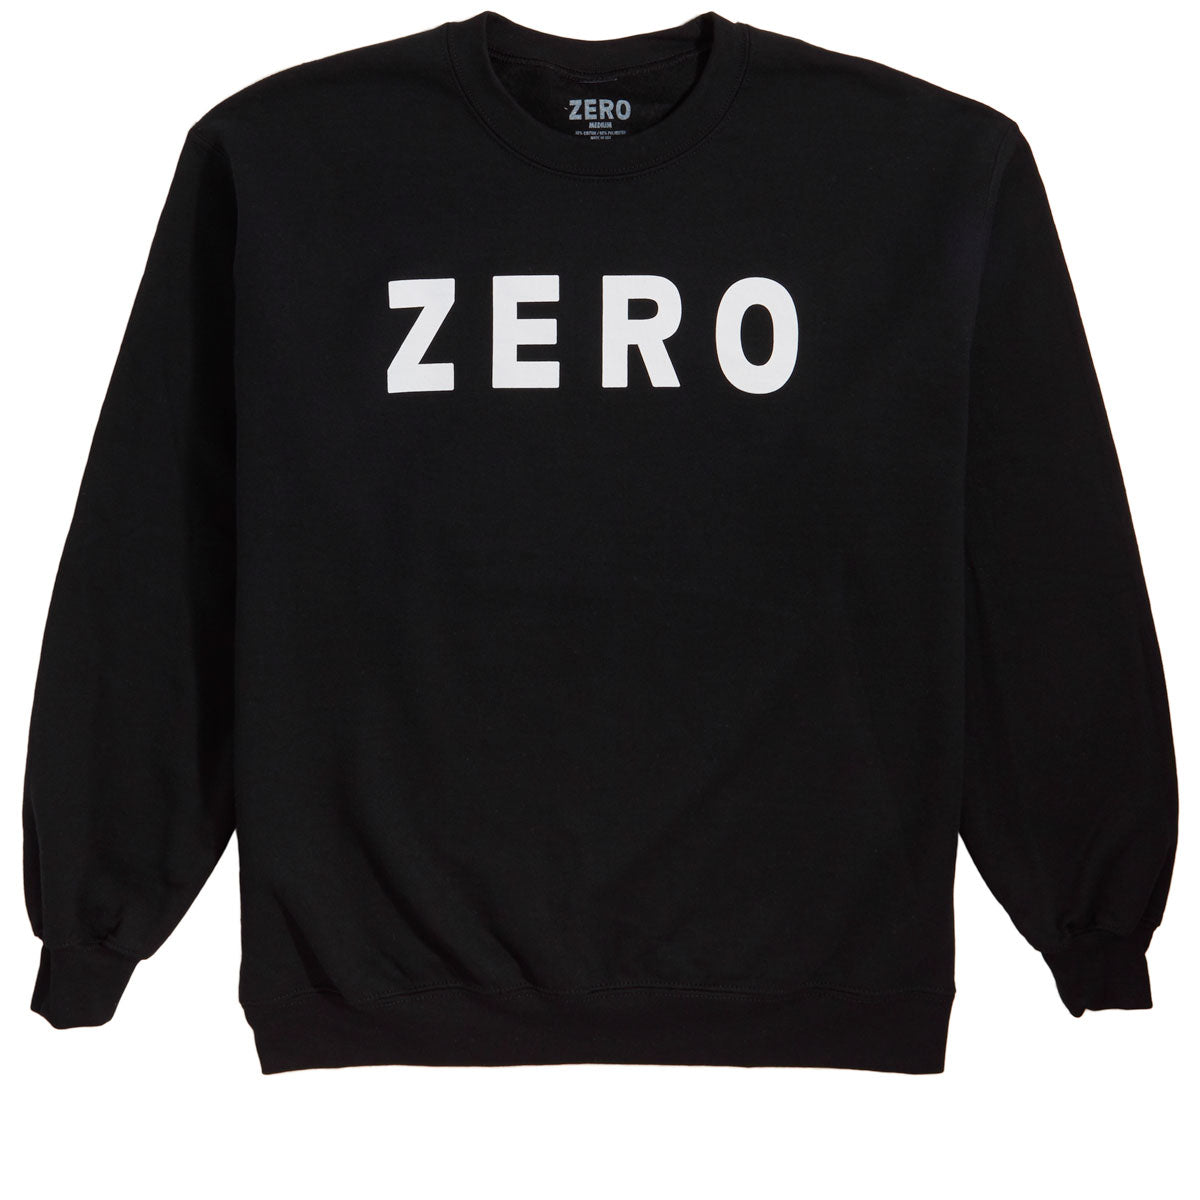 Zero Army Crewneck Sweatshirt - Black image 1